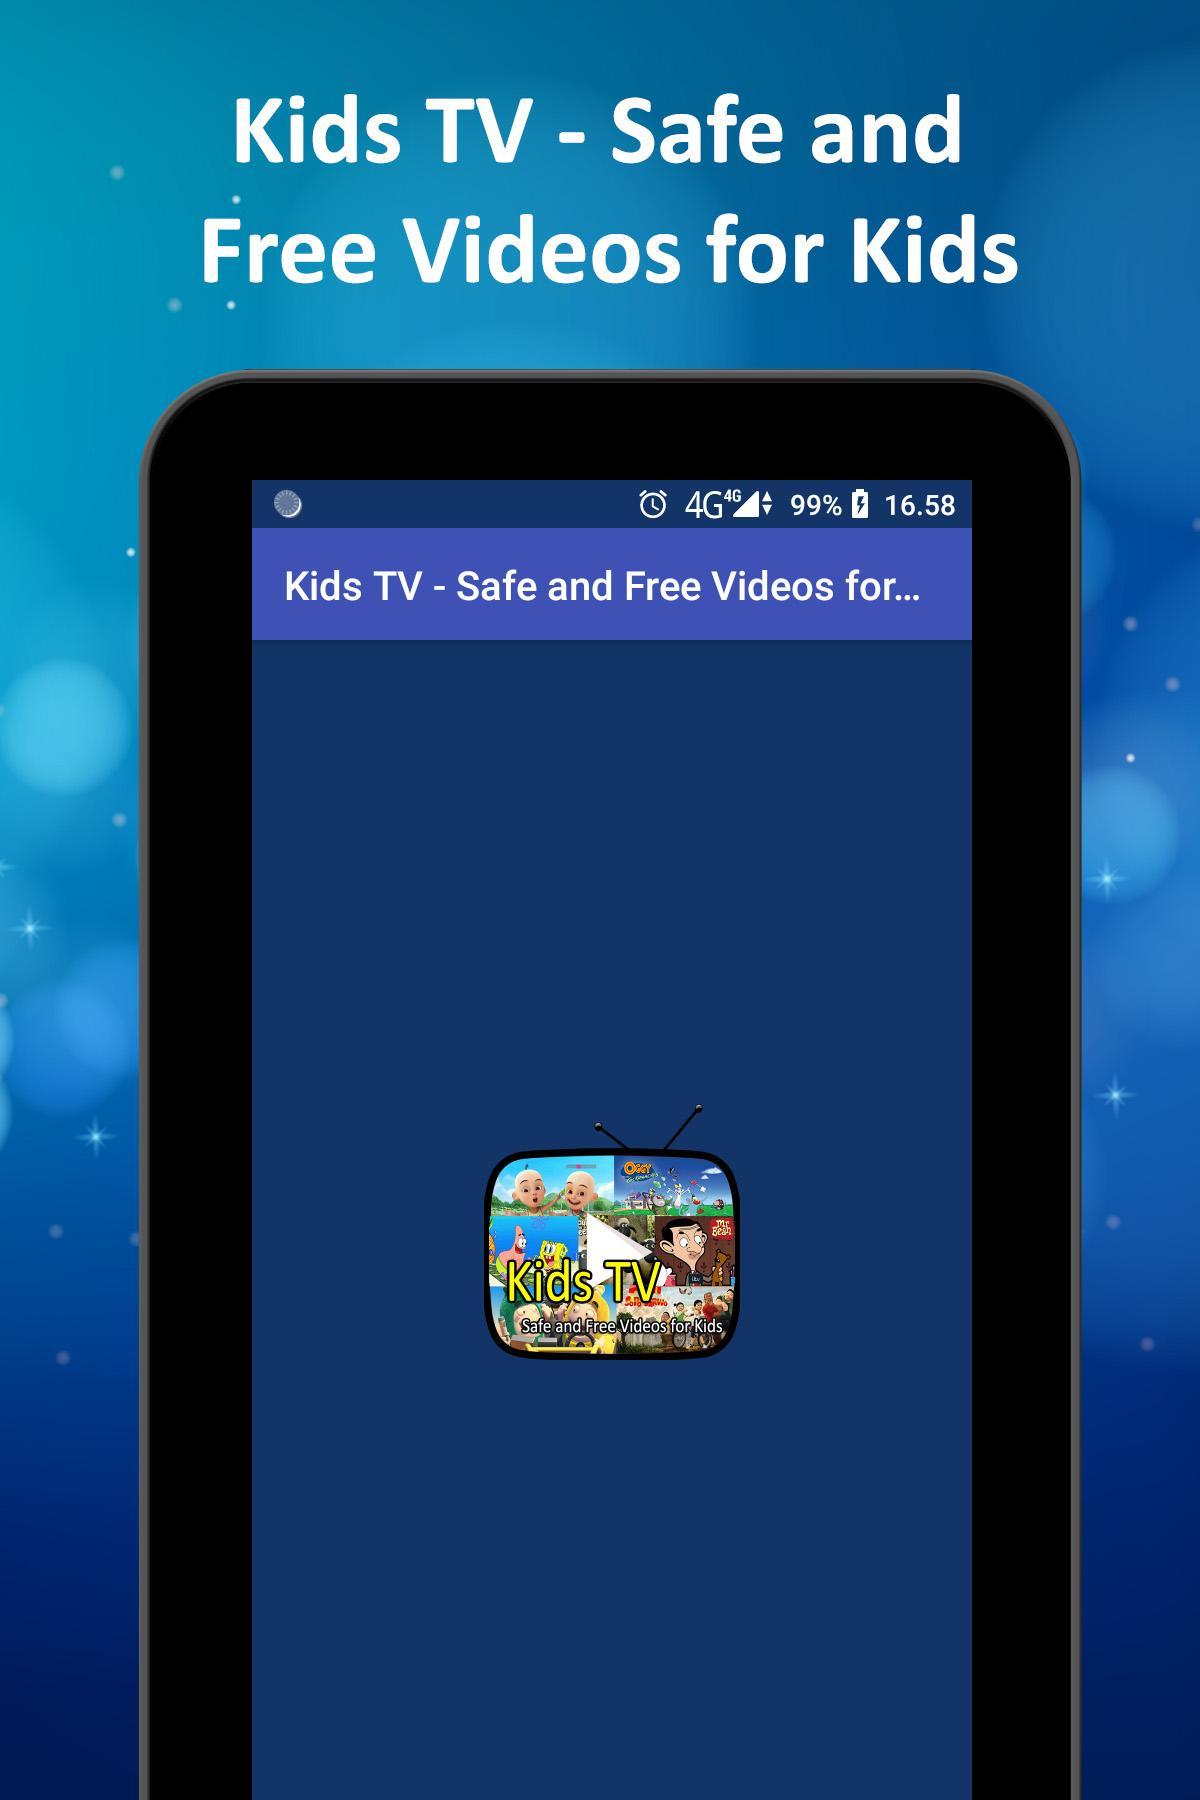 Live Cartoon TV - Kids TV Safe Video for Kids APK voor Android Download